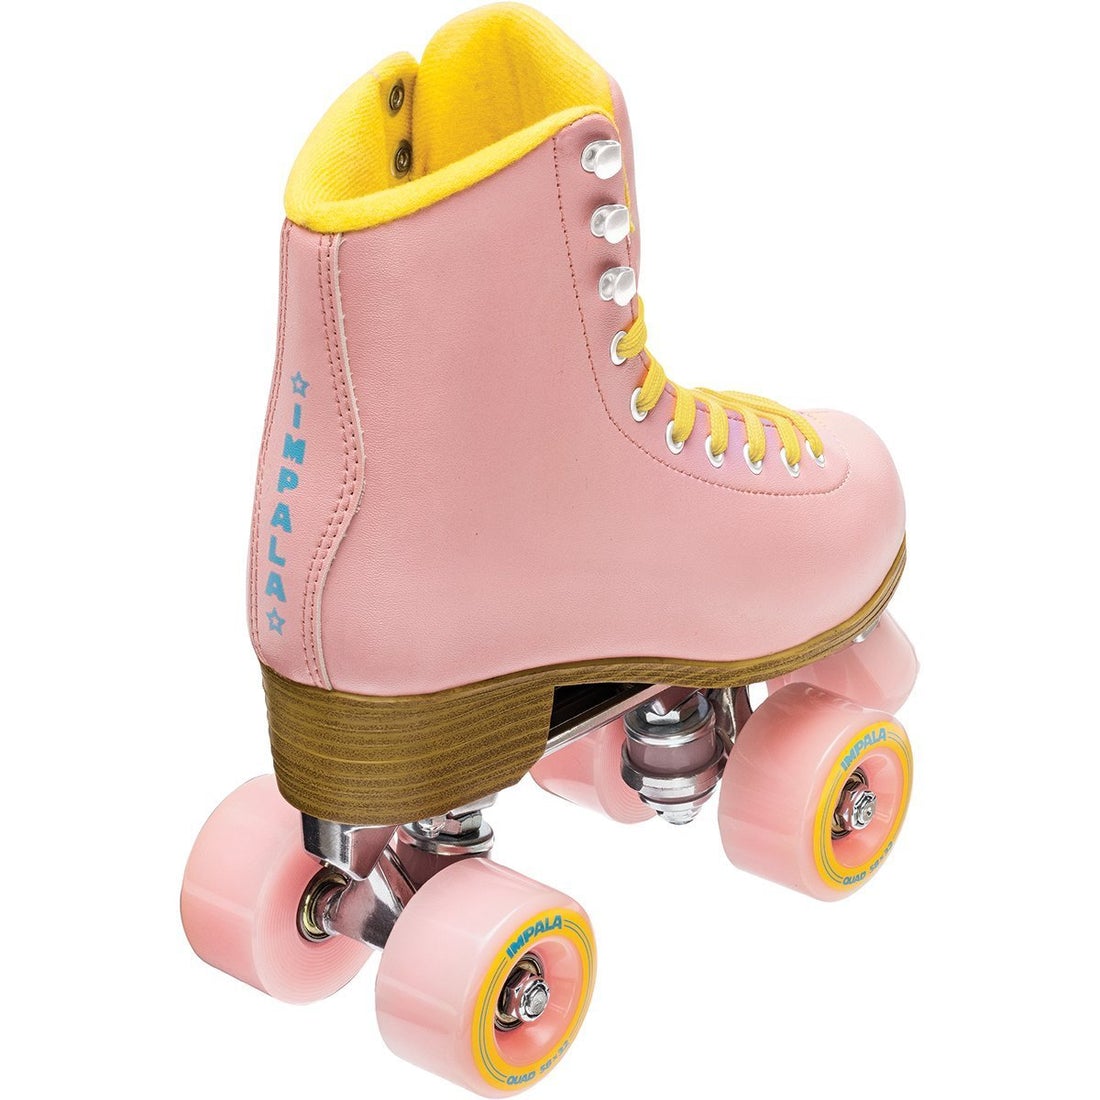 Impala Quad Skates Pink Yellow